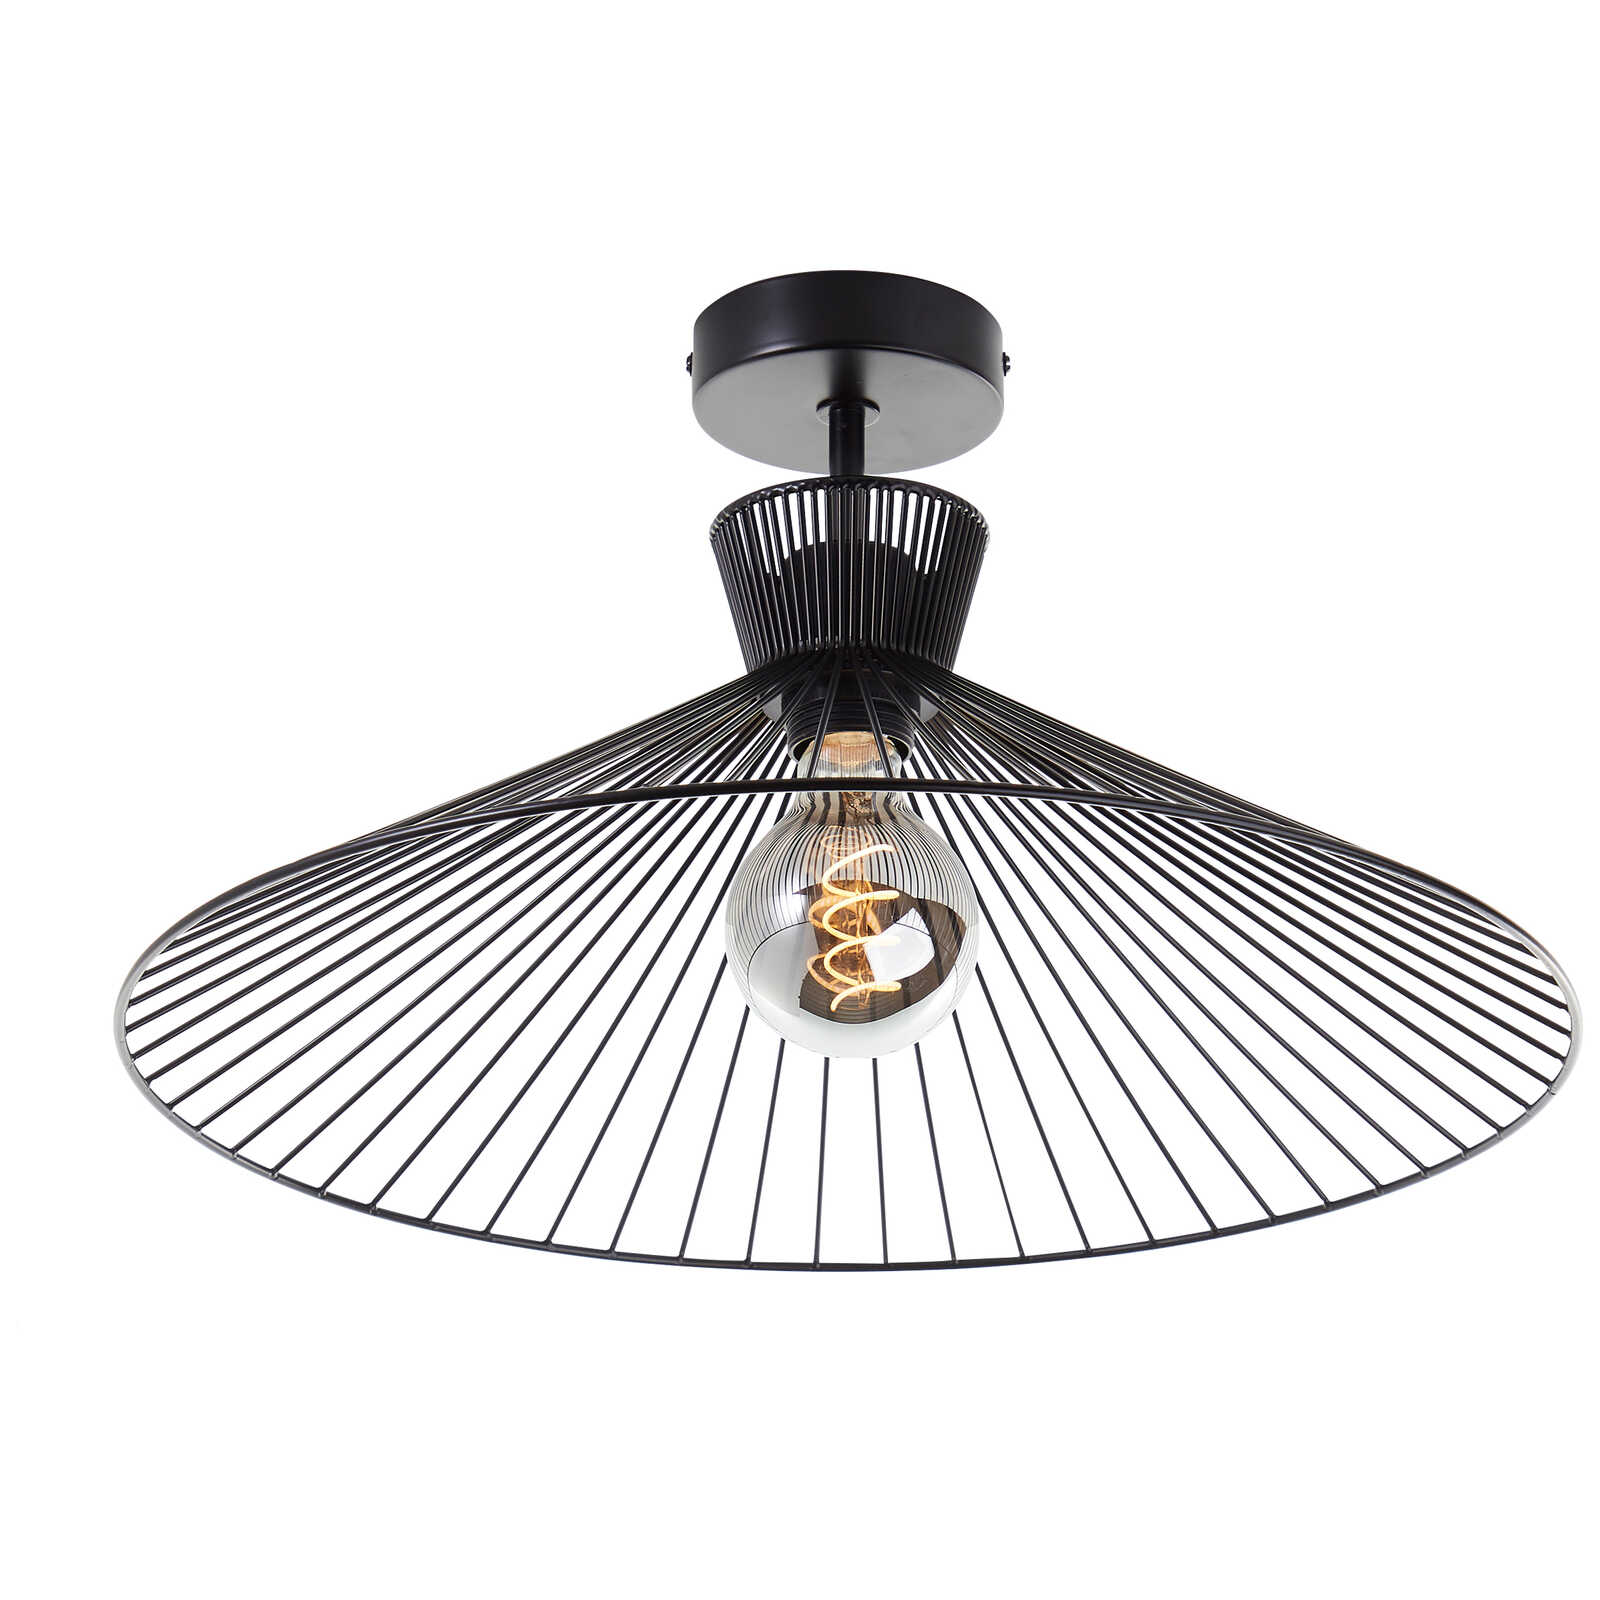             Metalen plafondlamp - Florentina - Zwart
        